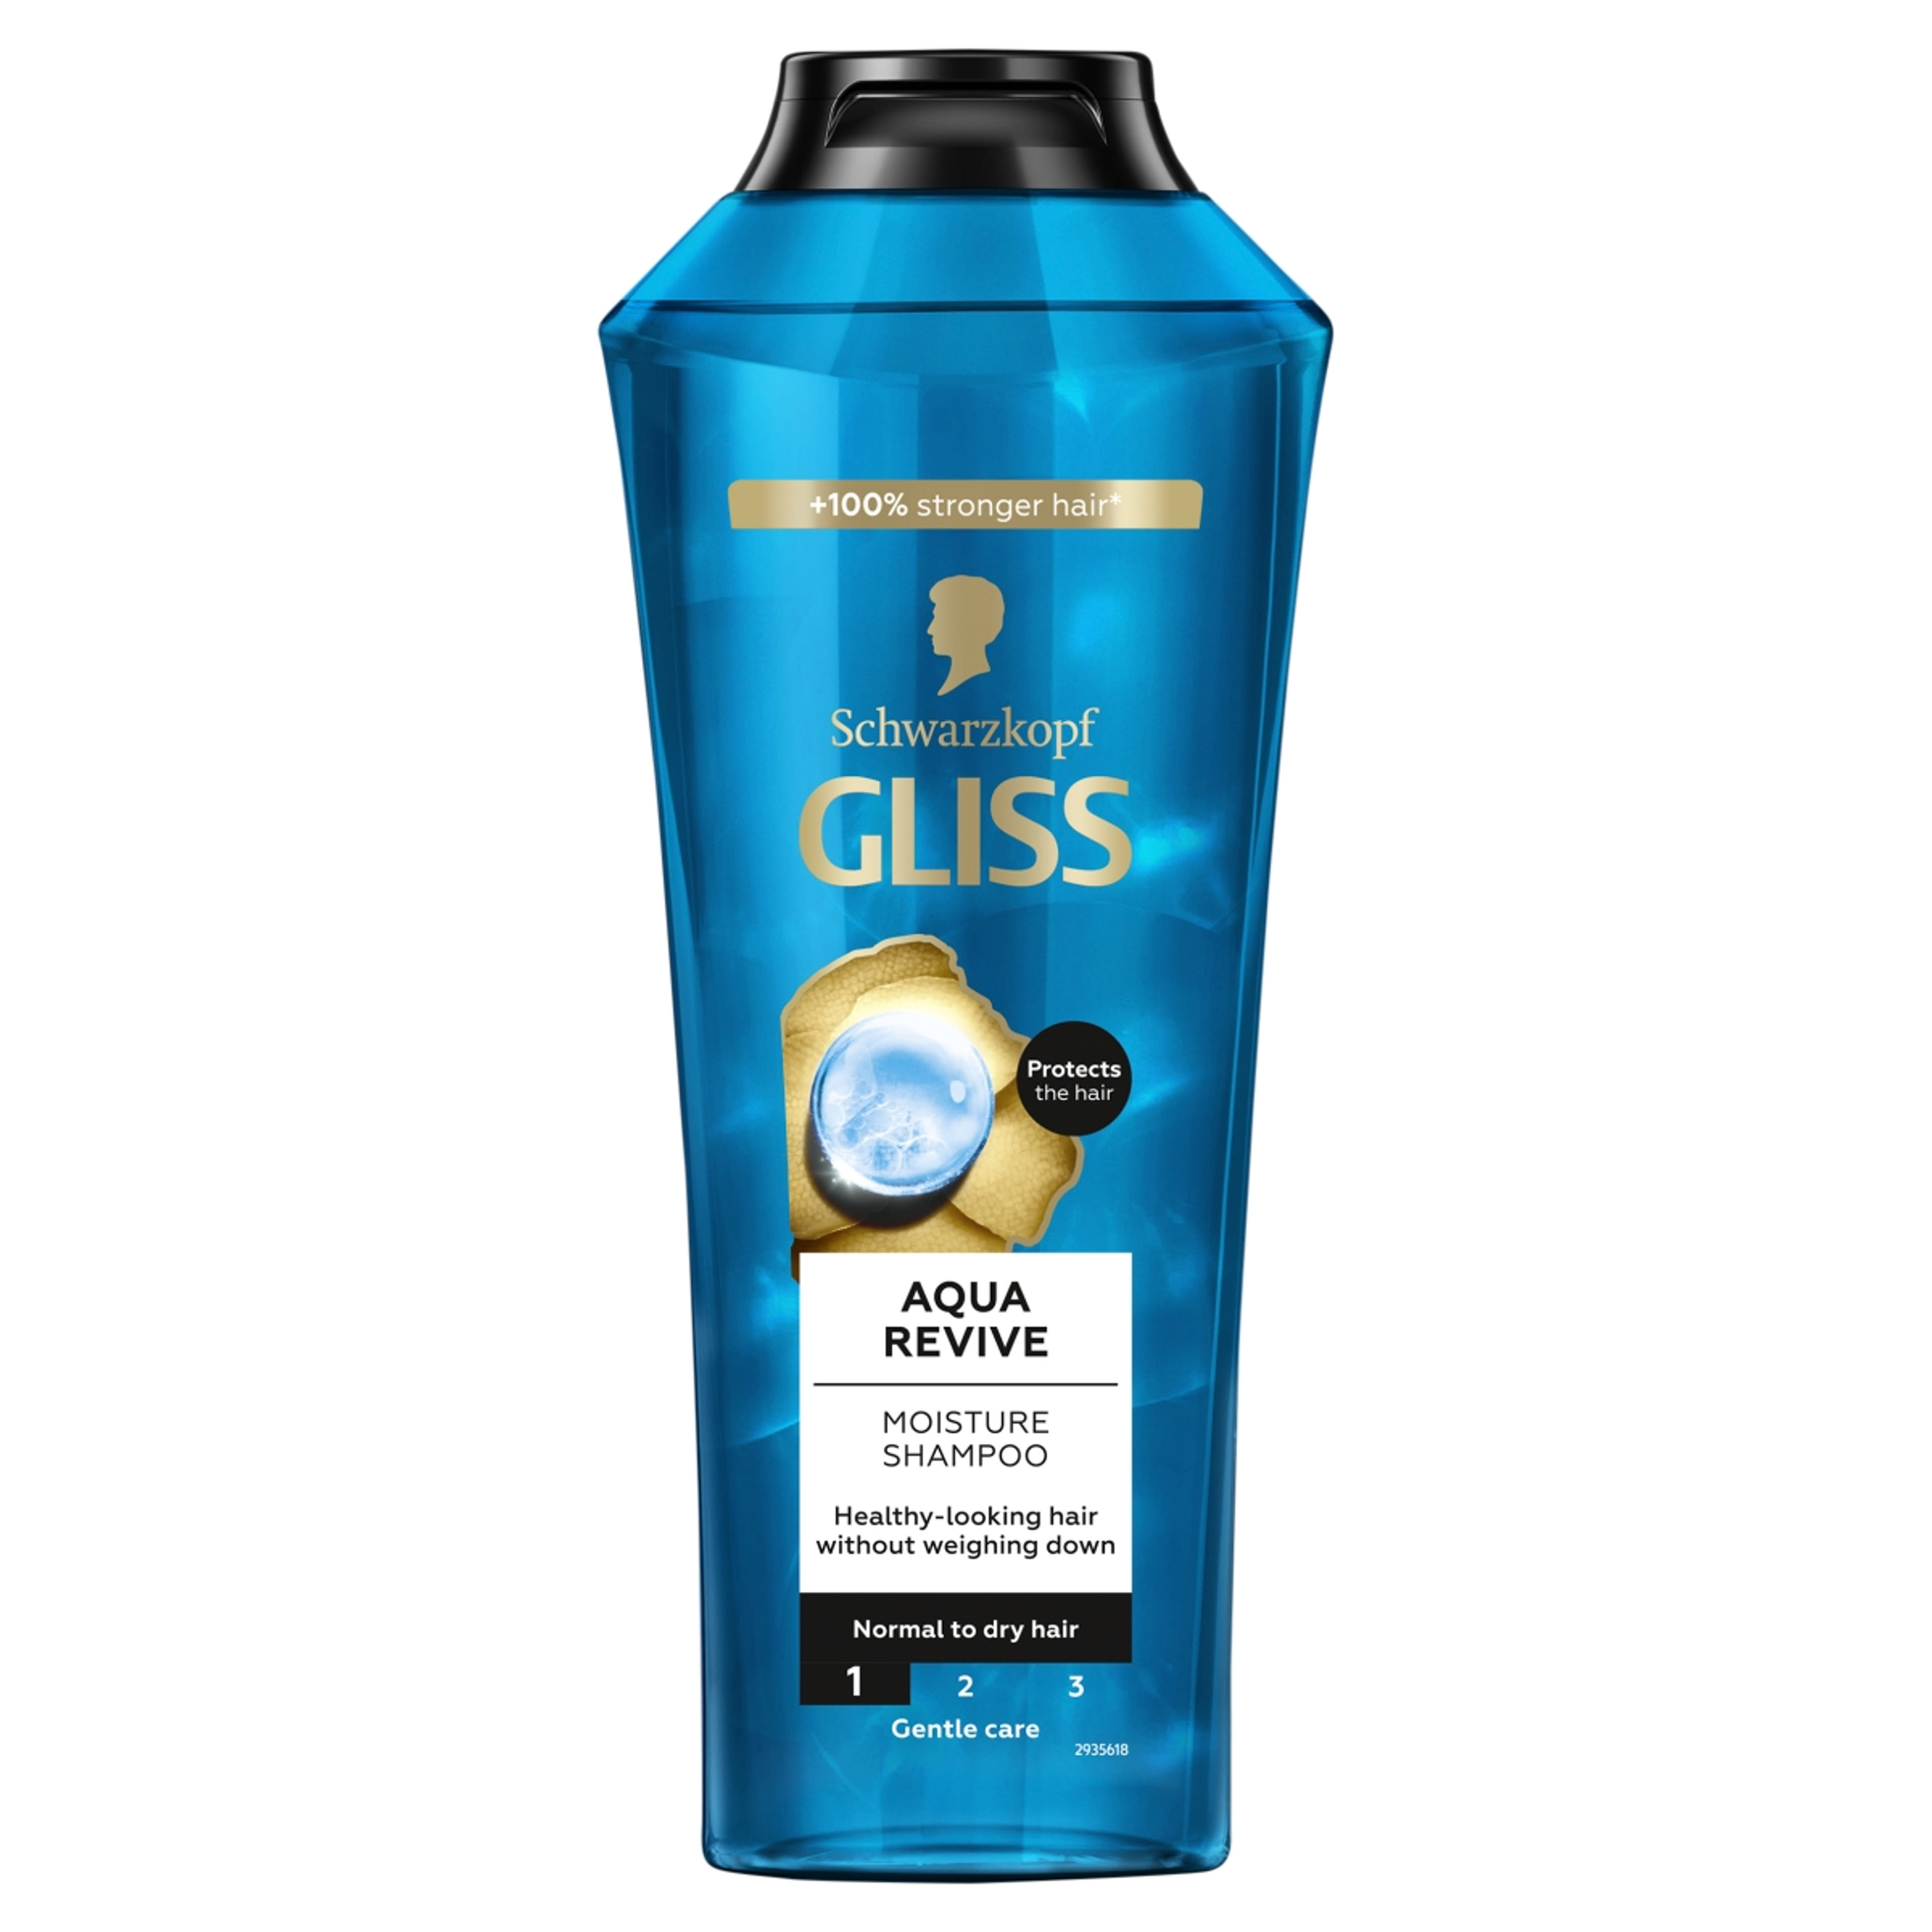 Gliss Aqua Revive sampon - 400 ml-1